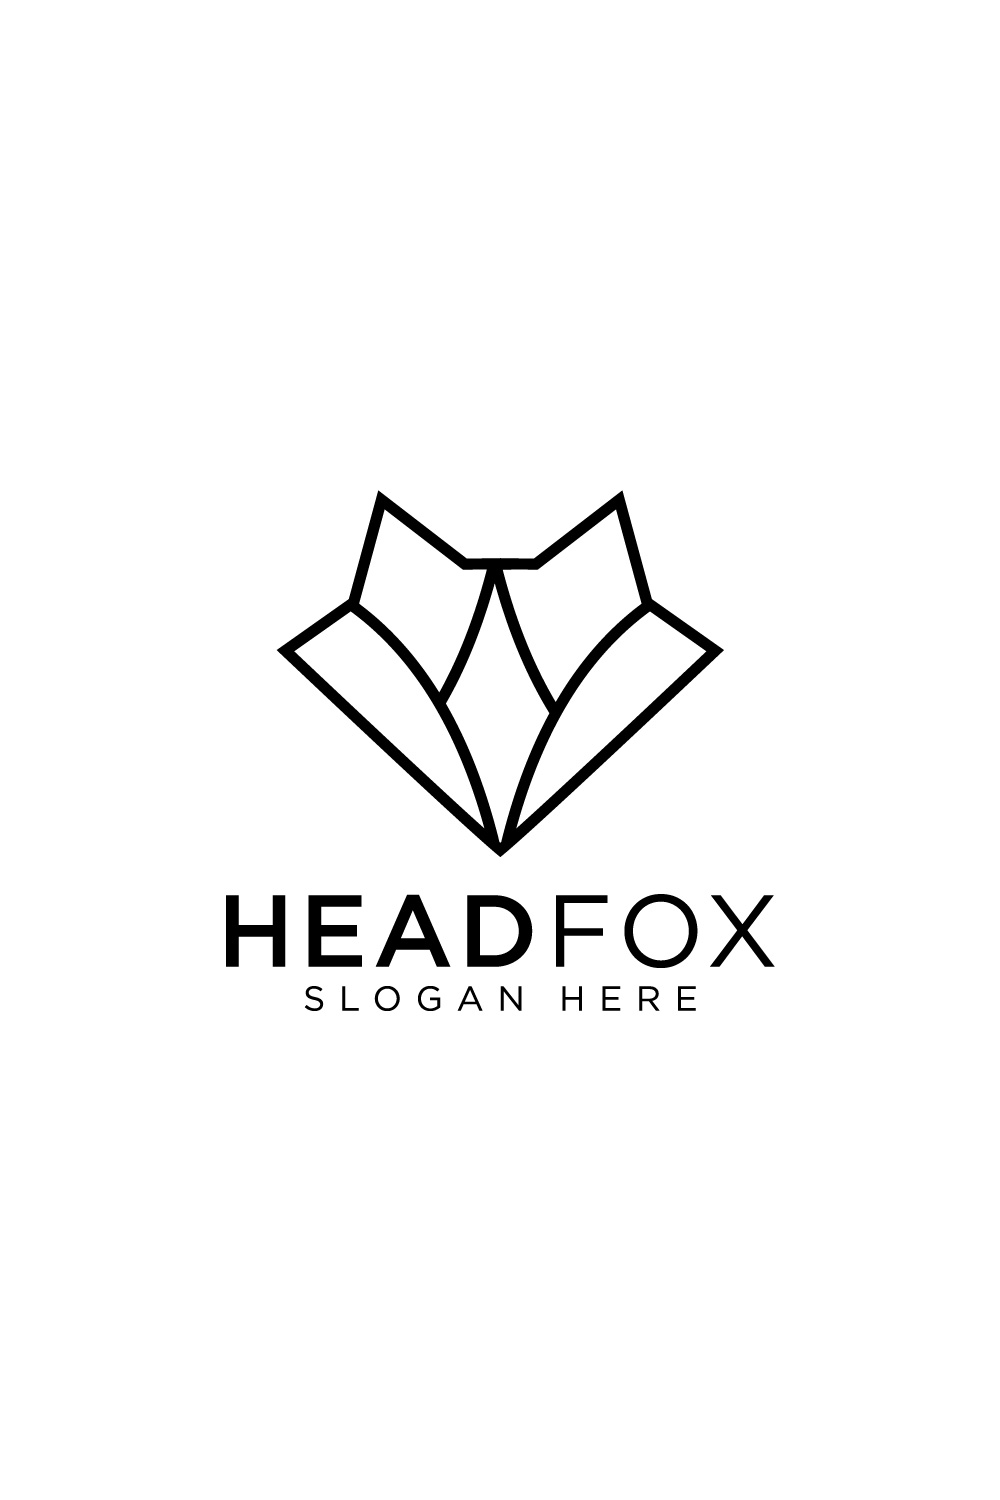 head fox logo design vector pinterest preview image.